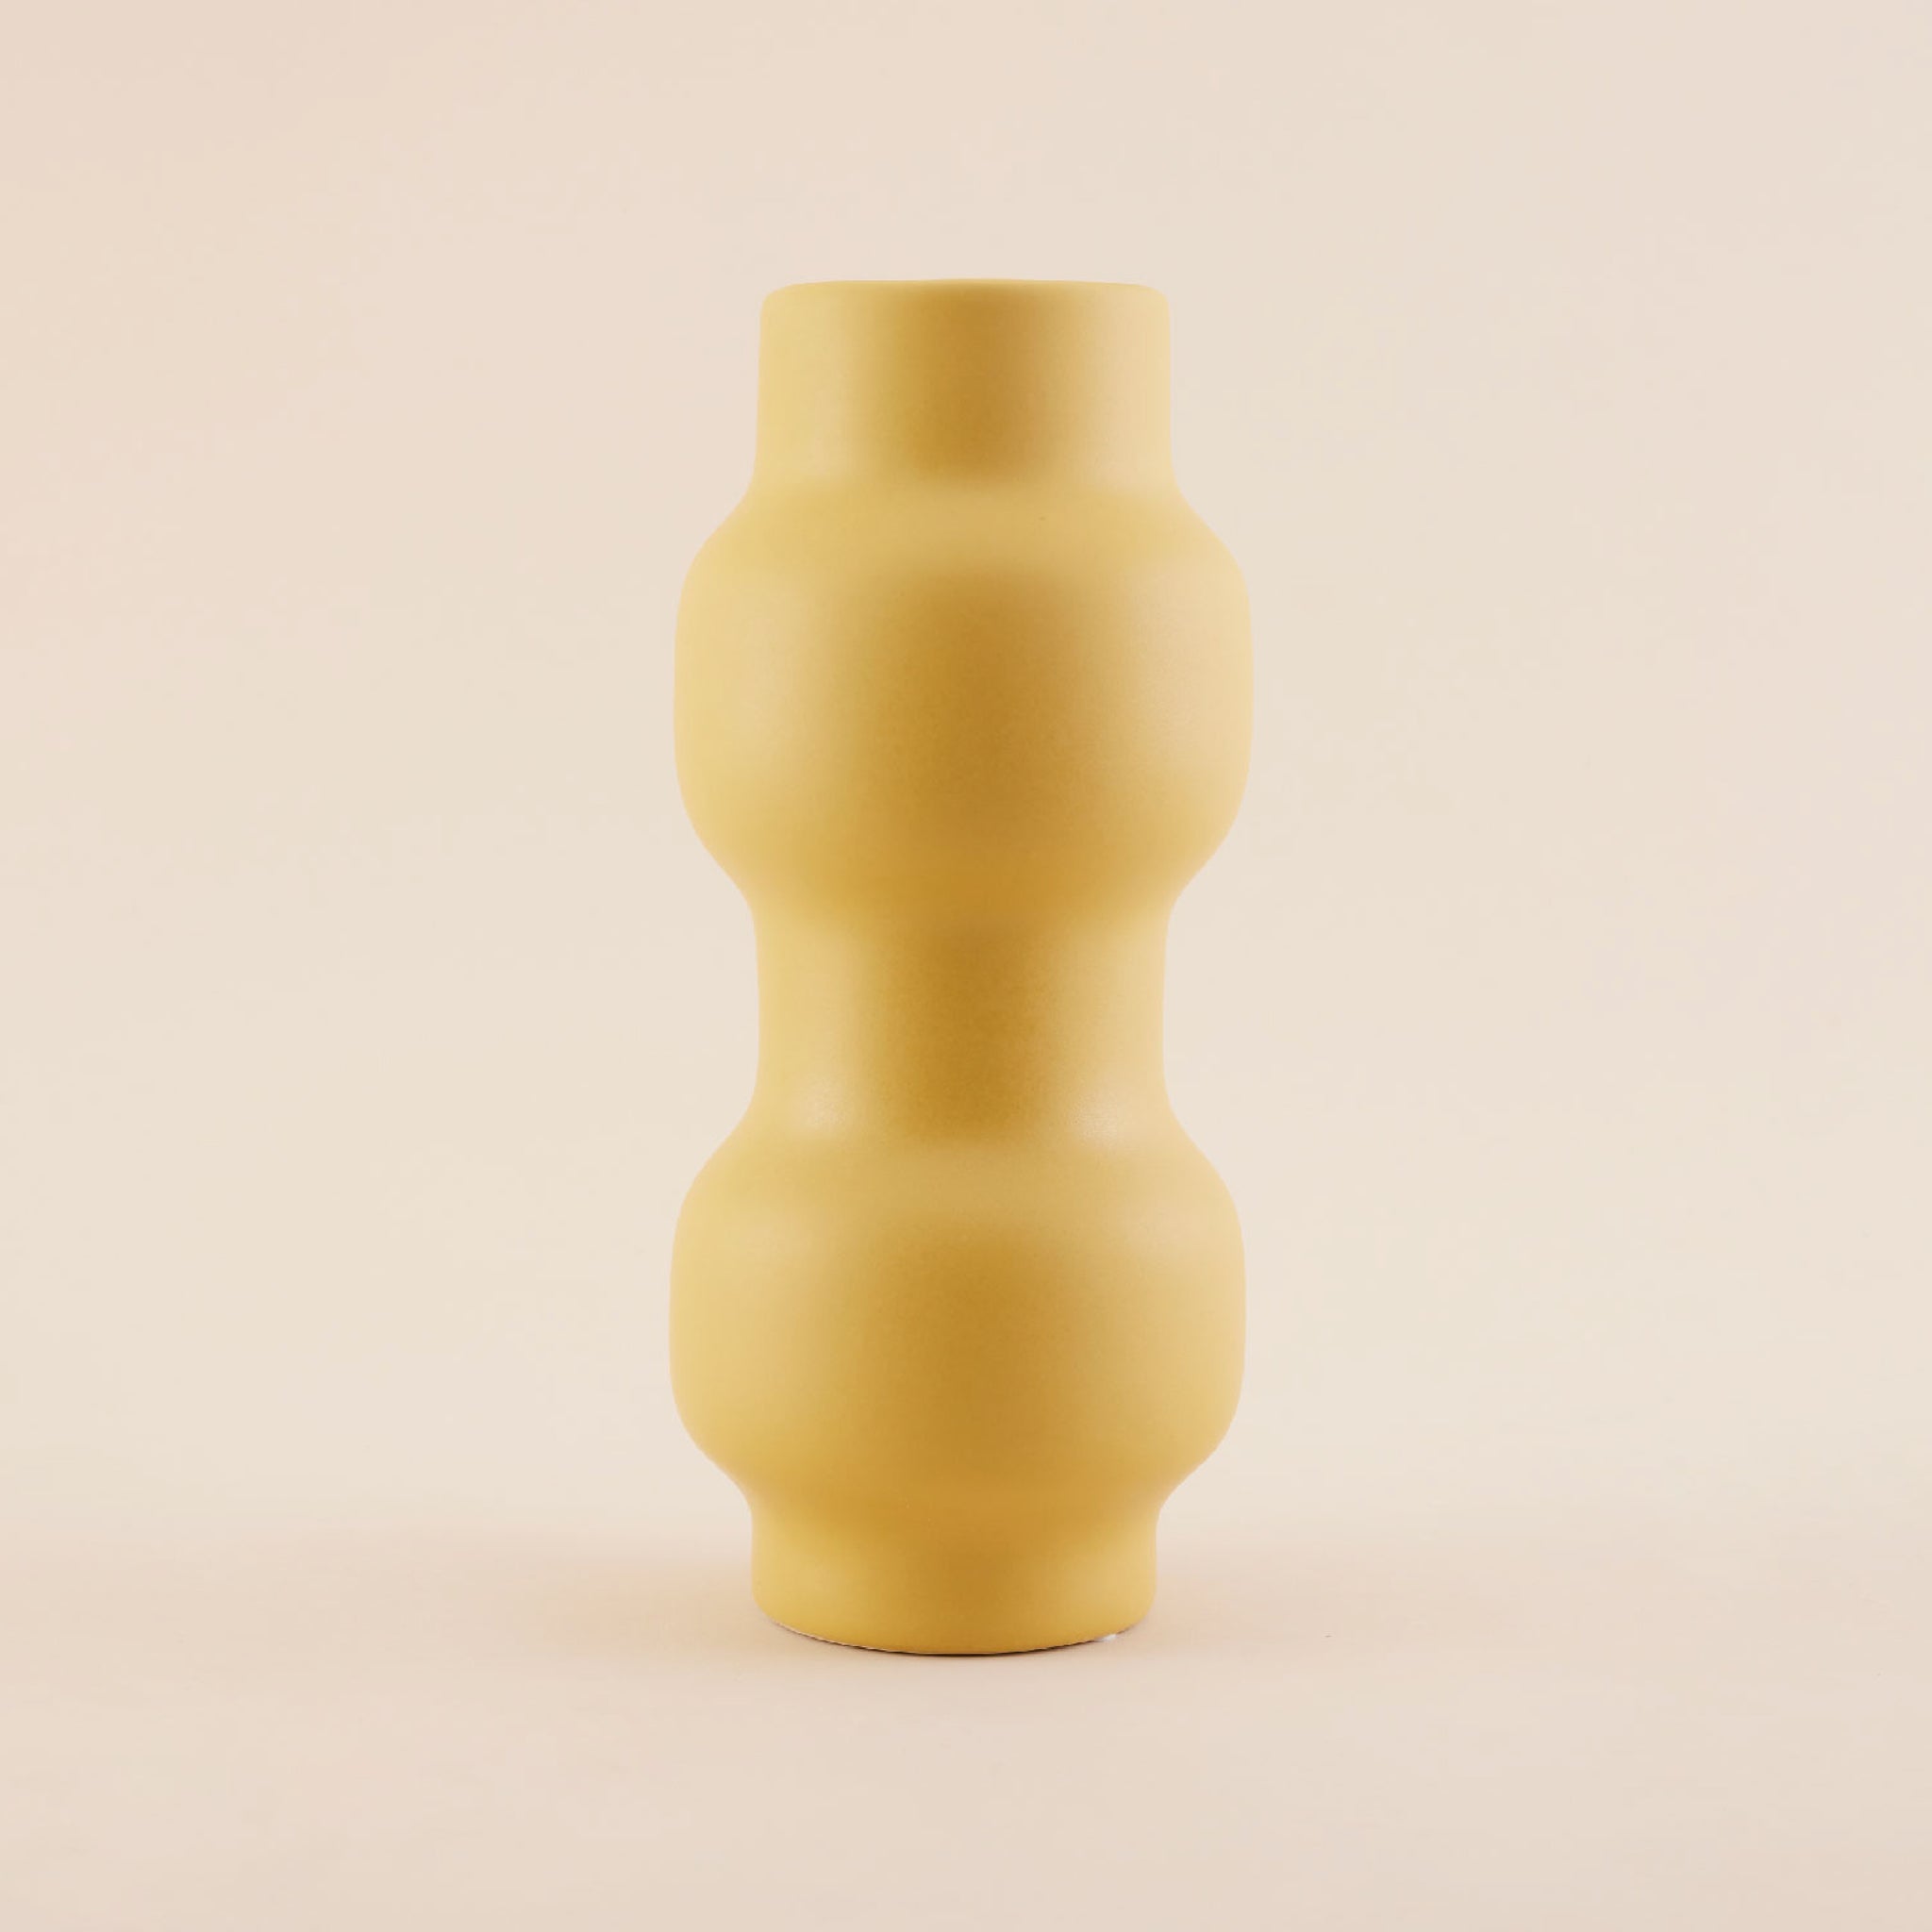 Yellow Porcelain Vase | แจกัน เซรามิก